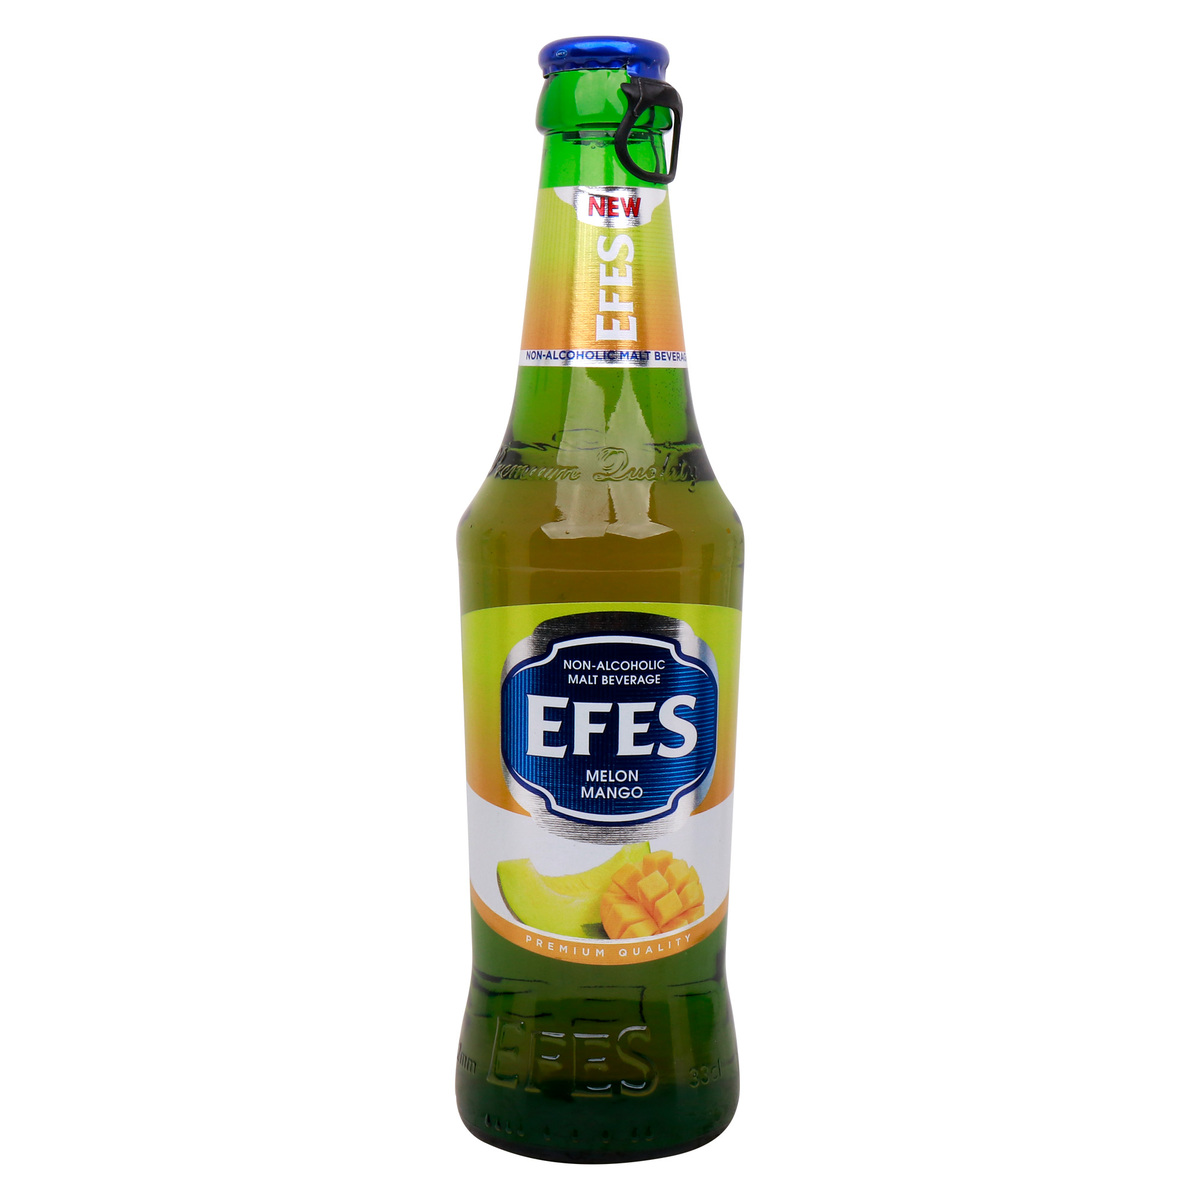 Efes Melon & Mango Non-Alcoholic Malt Beverage 330 ml